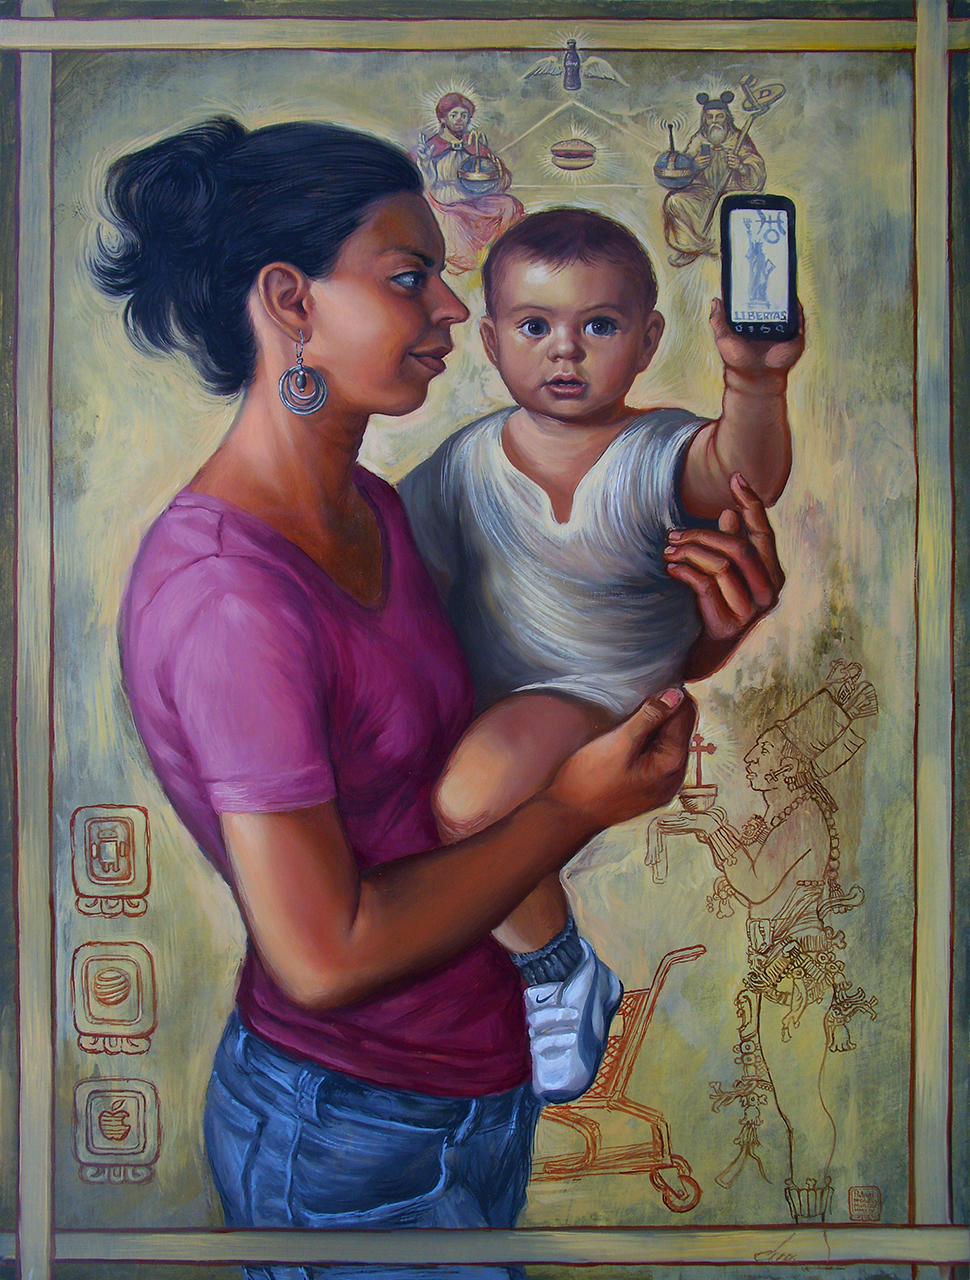 The Creed (2014) - Patrick McGrath Muñiz - Puerto Rican contemporary fine artist - oil on panel - 18" x 24" - US$. 3250.